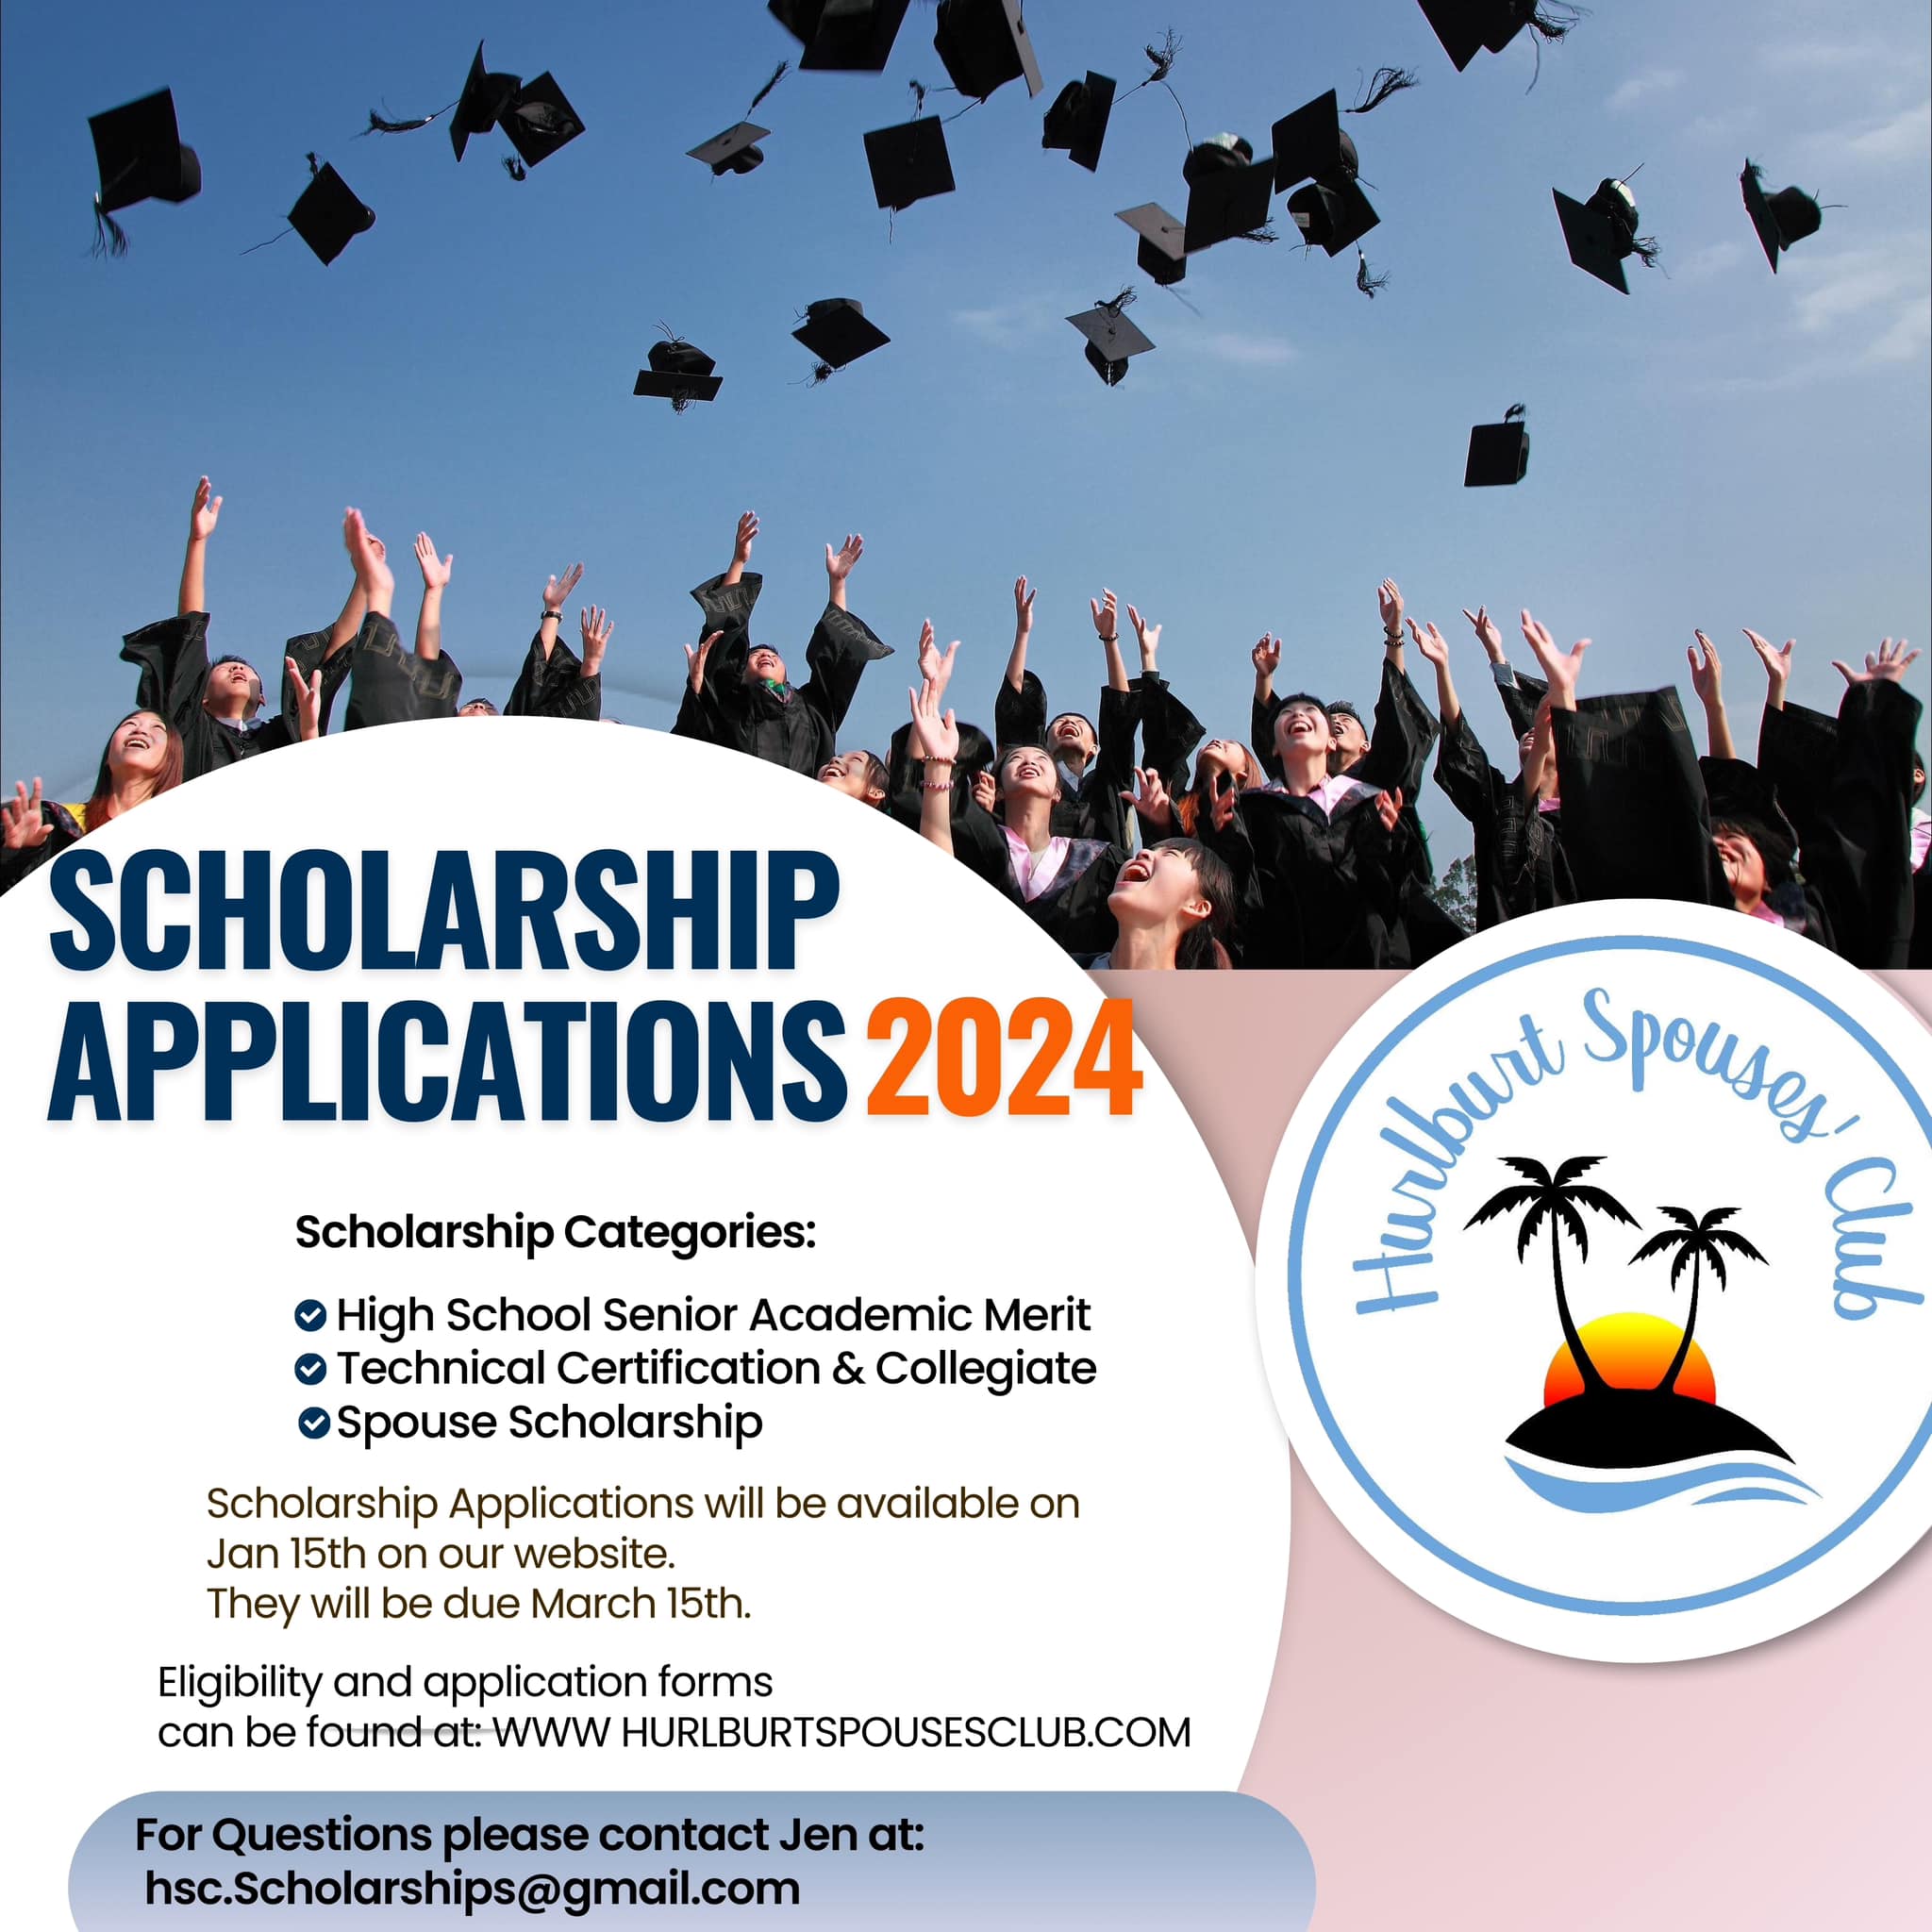 HSC Scholarships